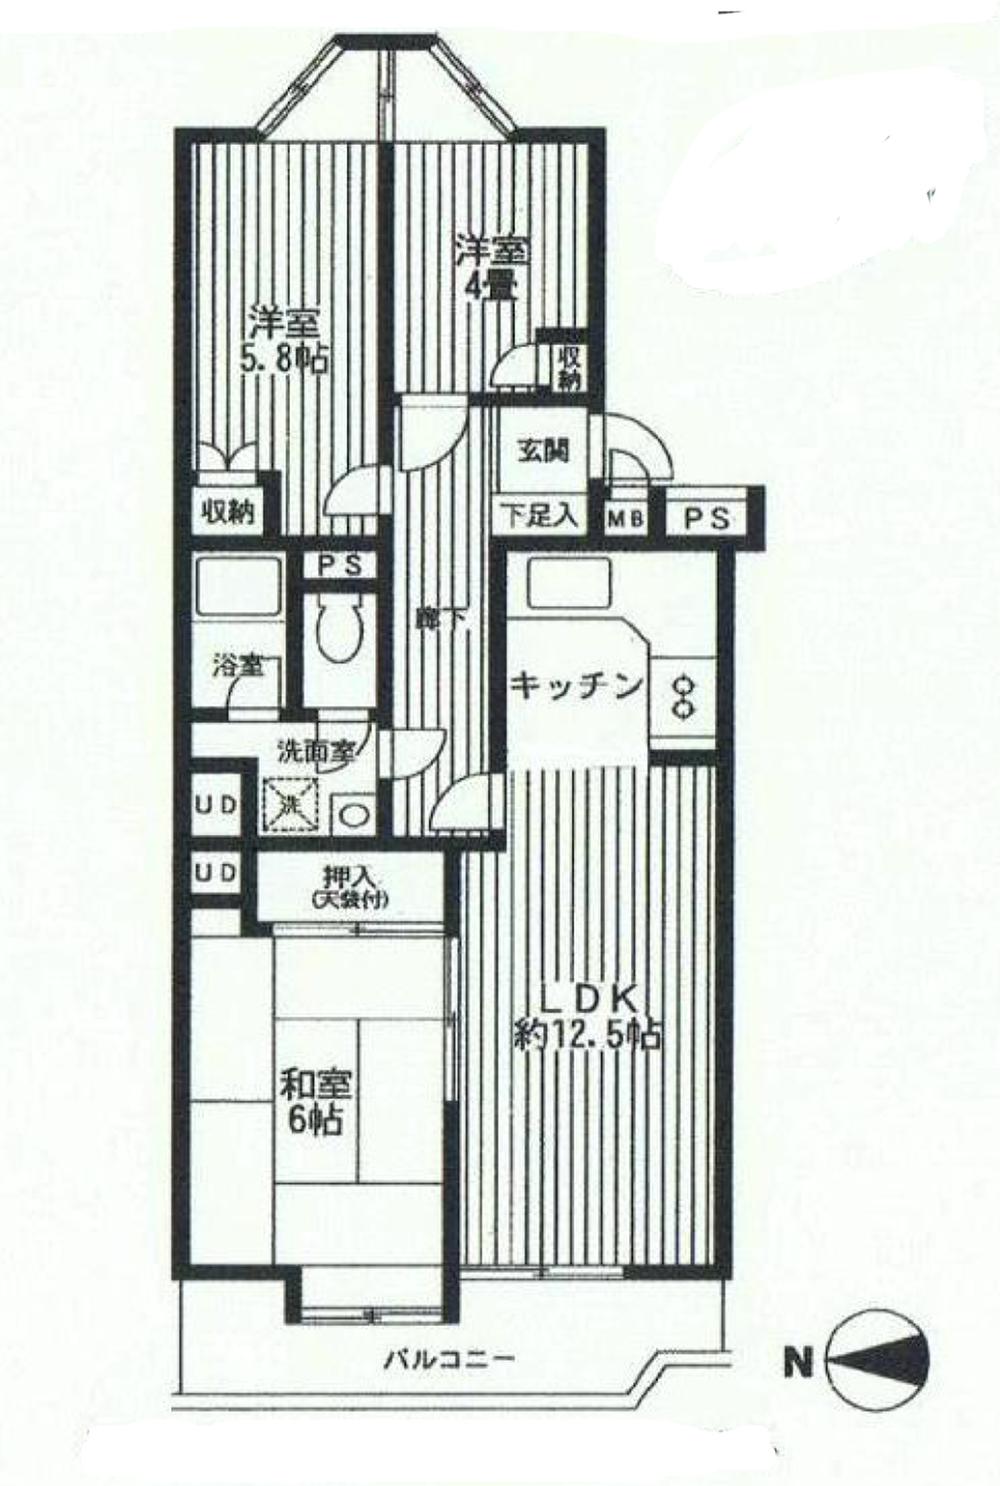 Floor plan. 3LDK, Price 9.8 million yen, Occupied area 61.54 sq m , Balcony area 7.5 sq m